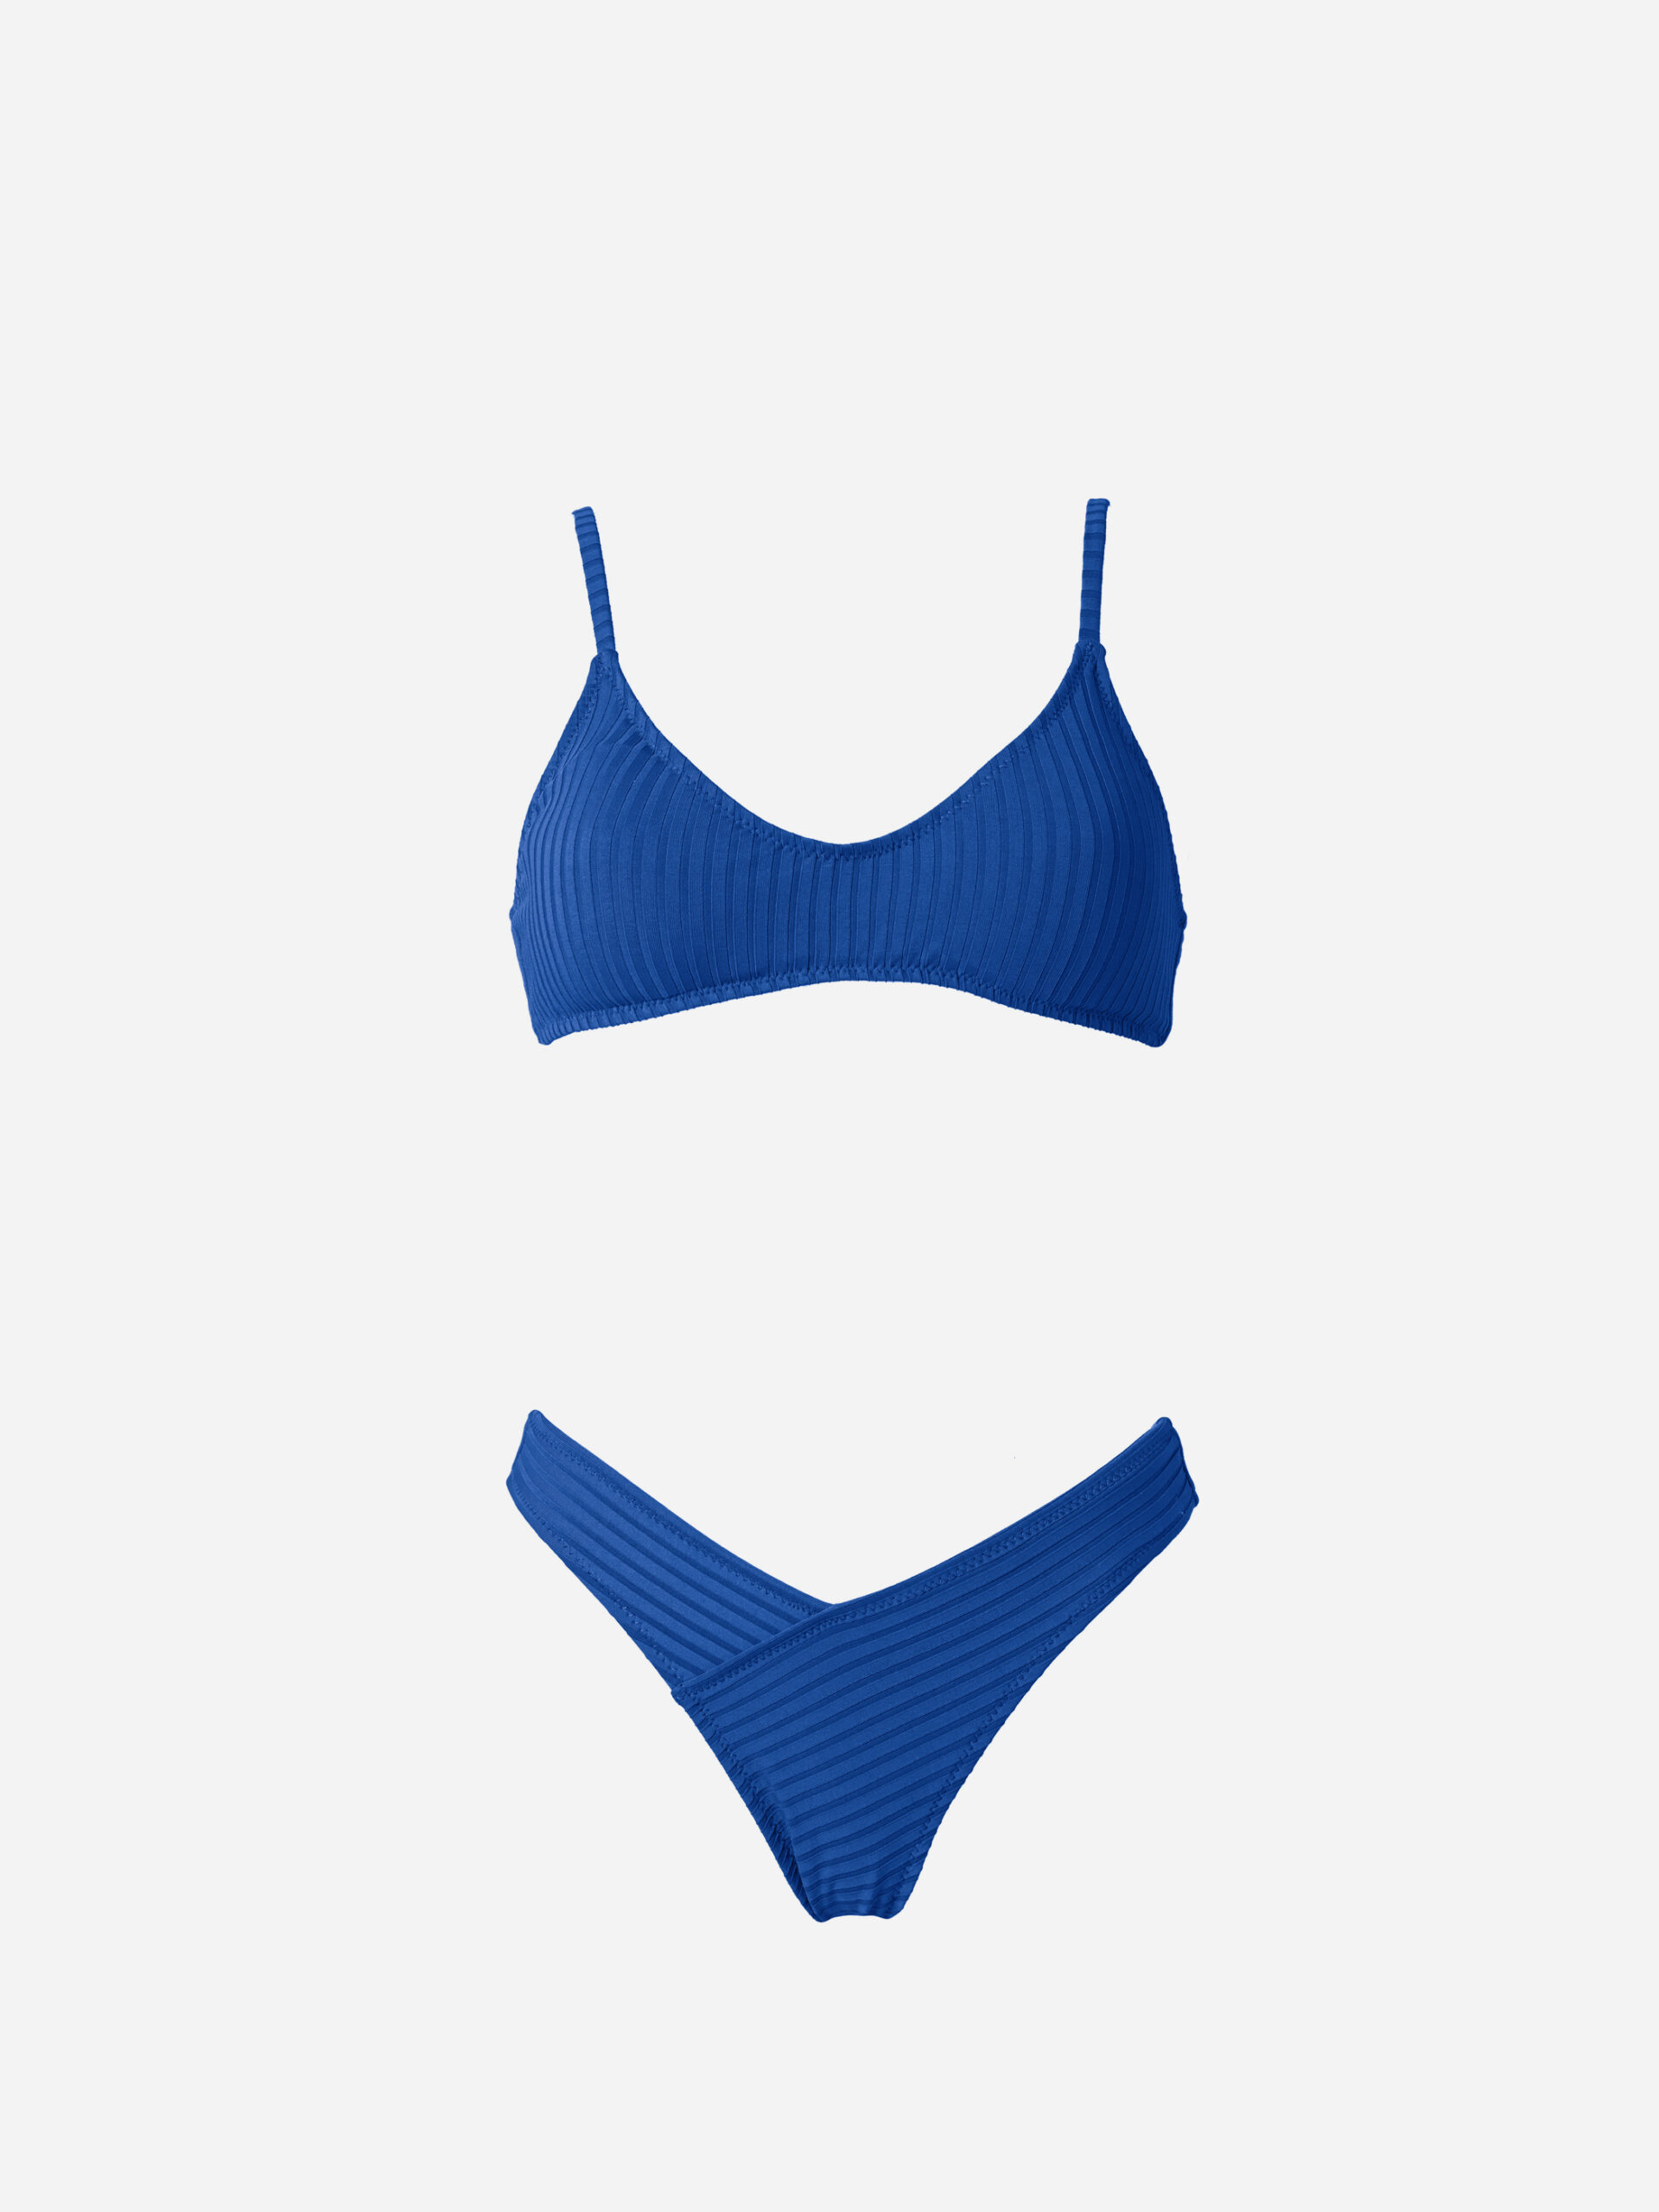 Astrid Blue Bikini - Shop - Matchbox